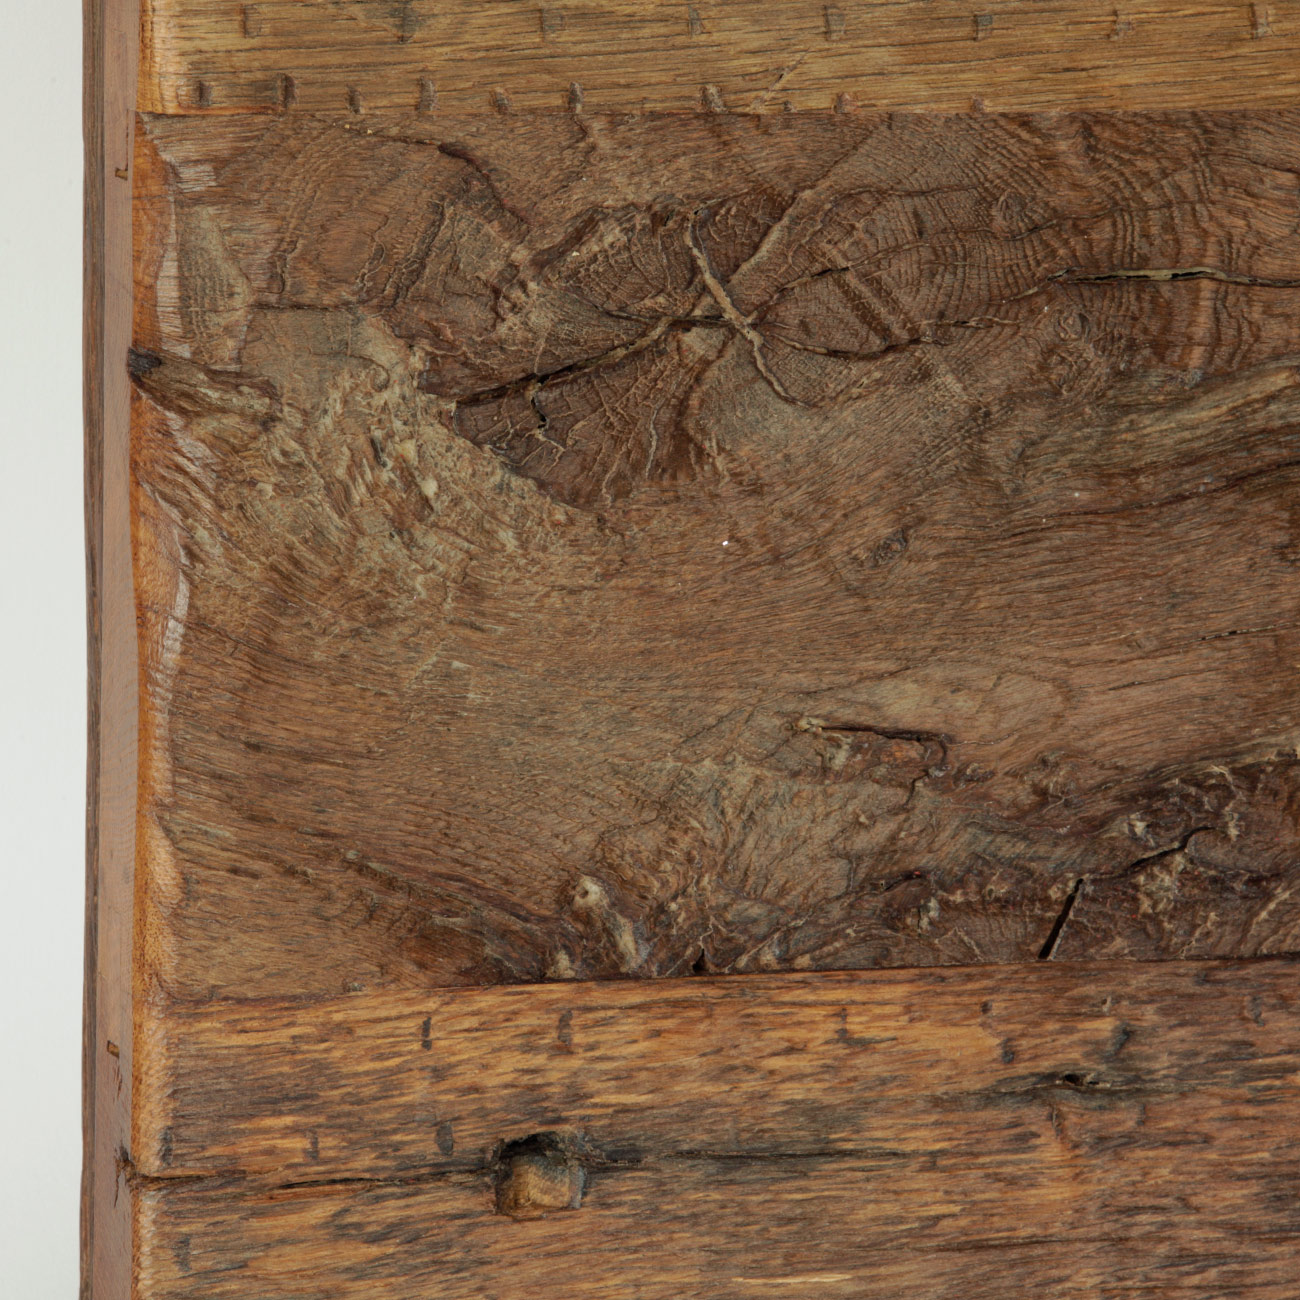 Quadratische Wandleuchte aus antikem Massivholz (40 cm): Eiche antik Patina